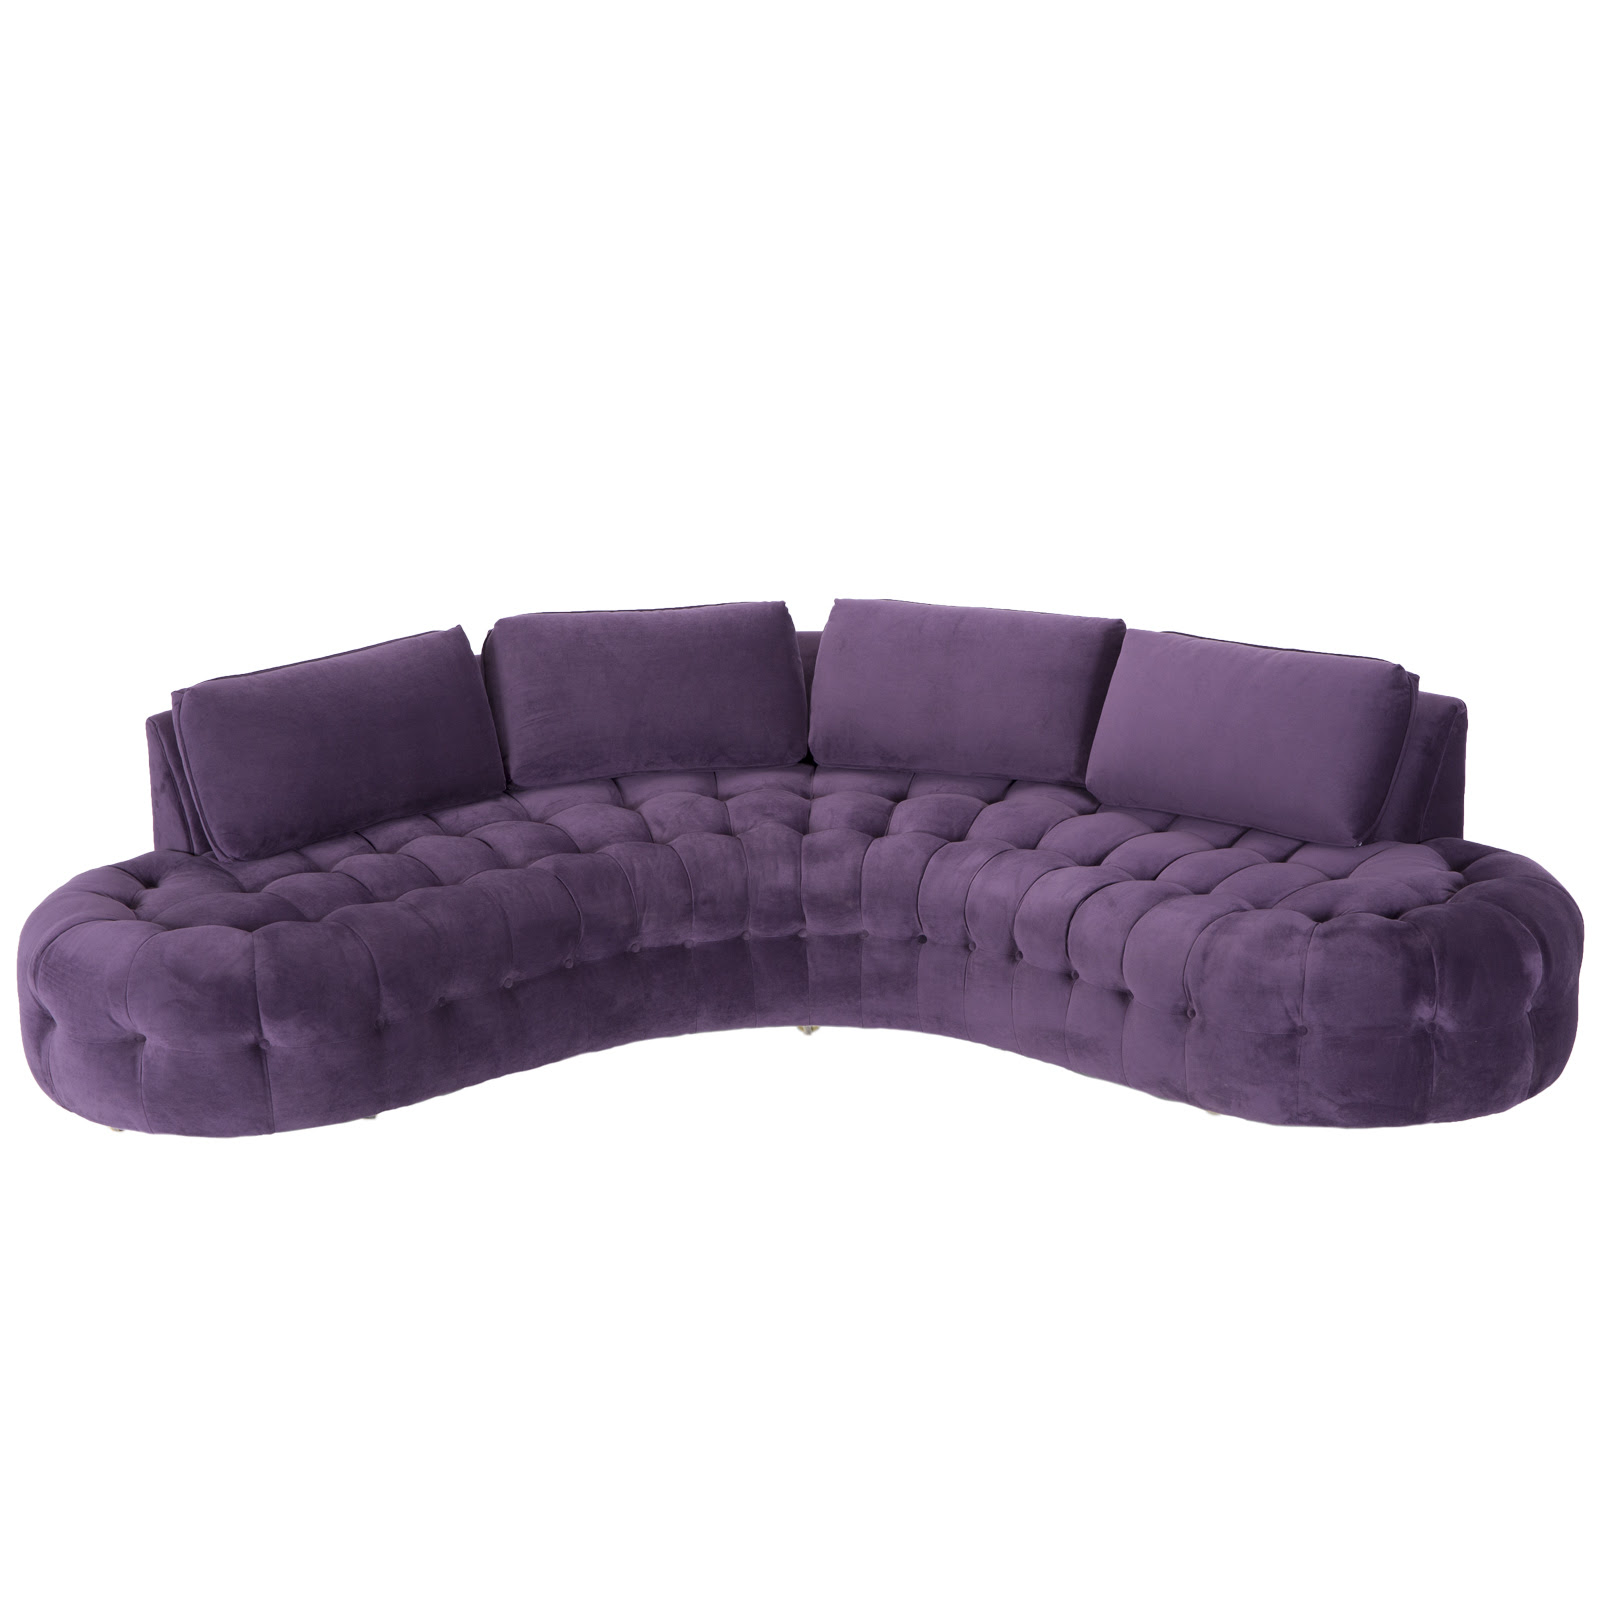 Half Moon Sofa Rental | Event Trade Show Furniture Rental ...